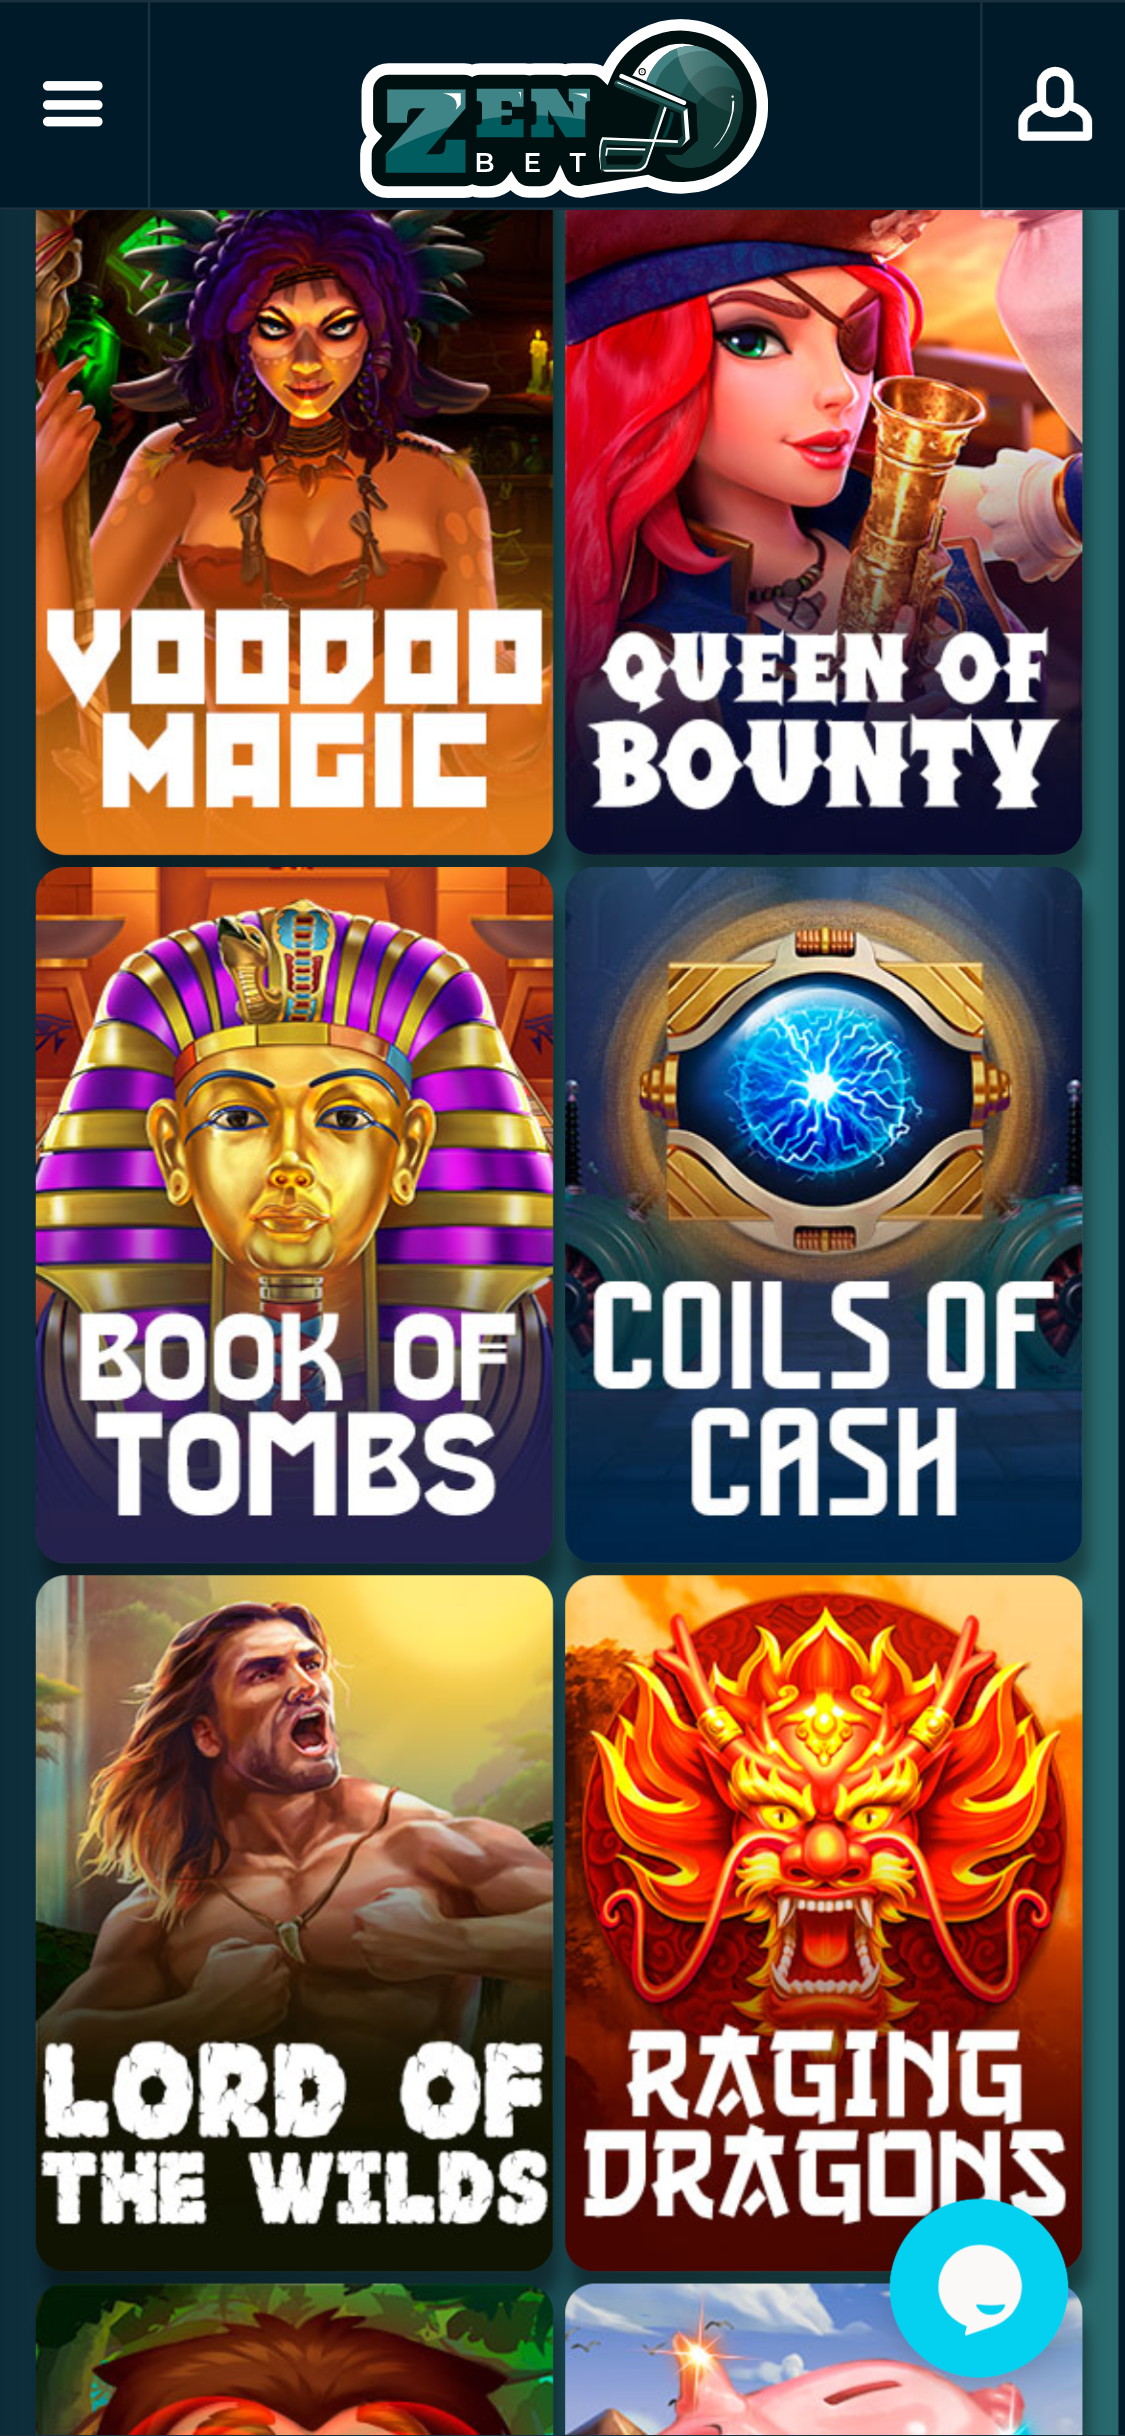 Zen Betting Casino Mobile Games Review